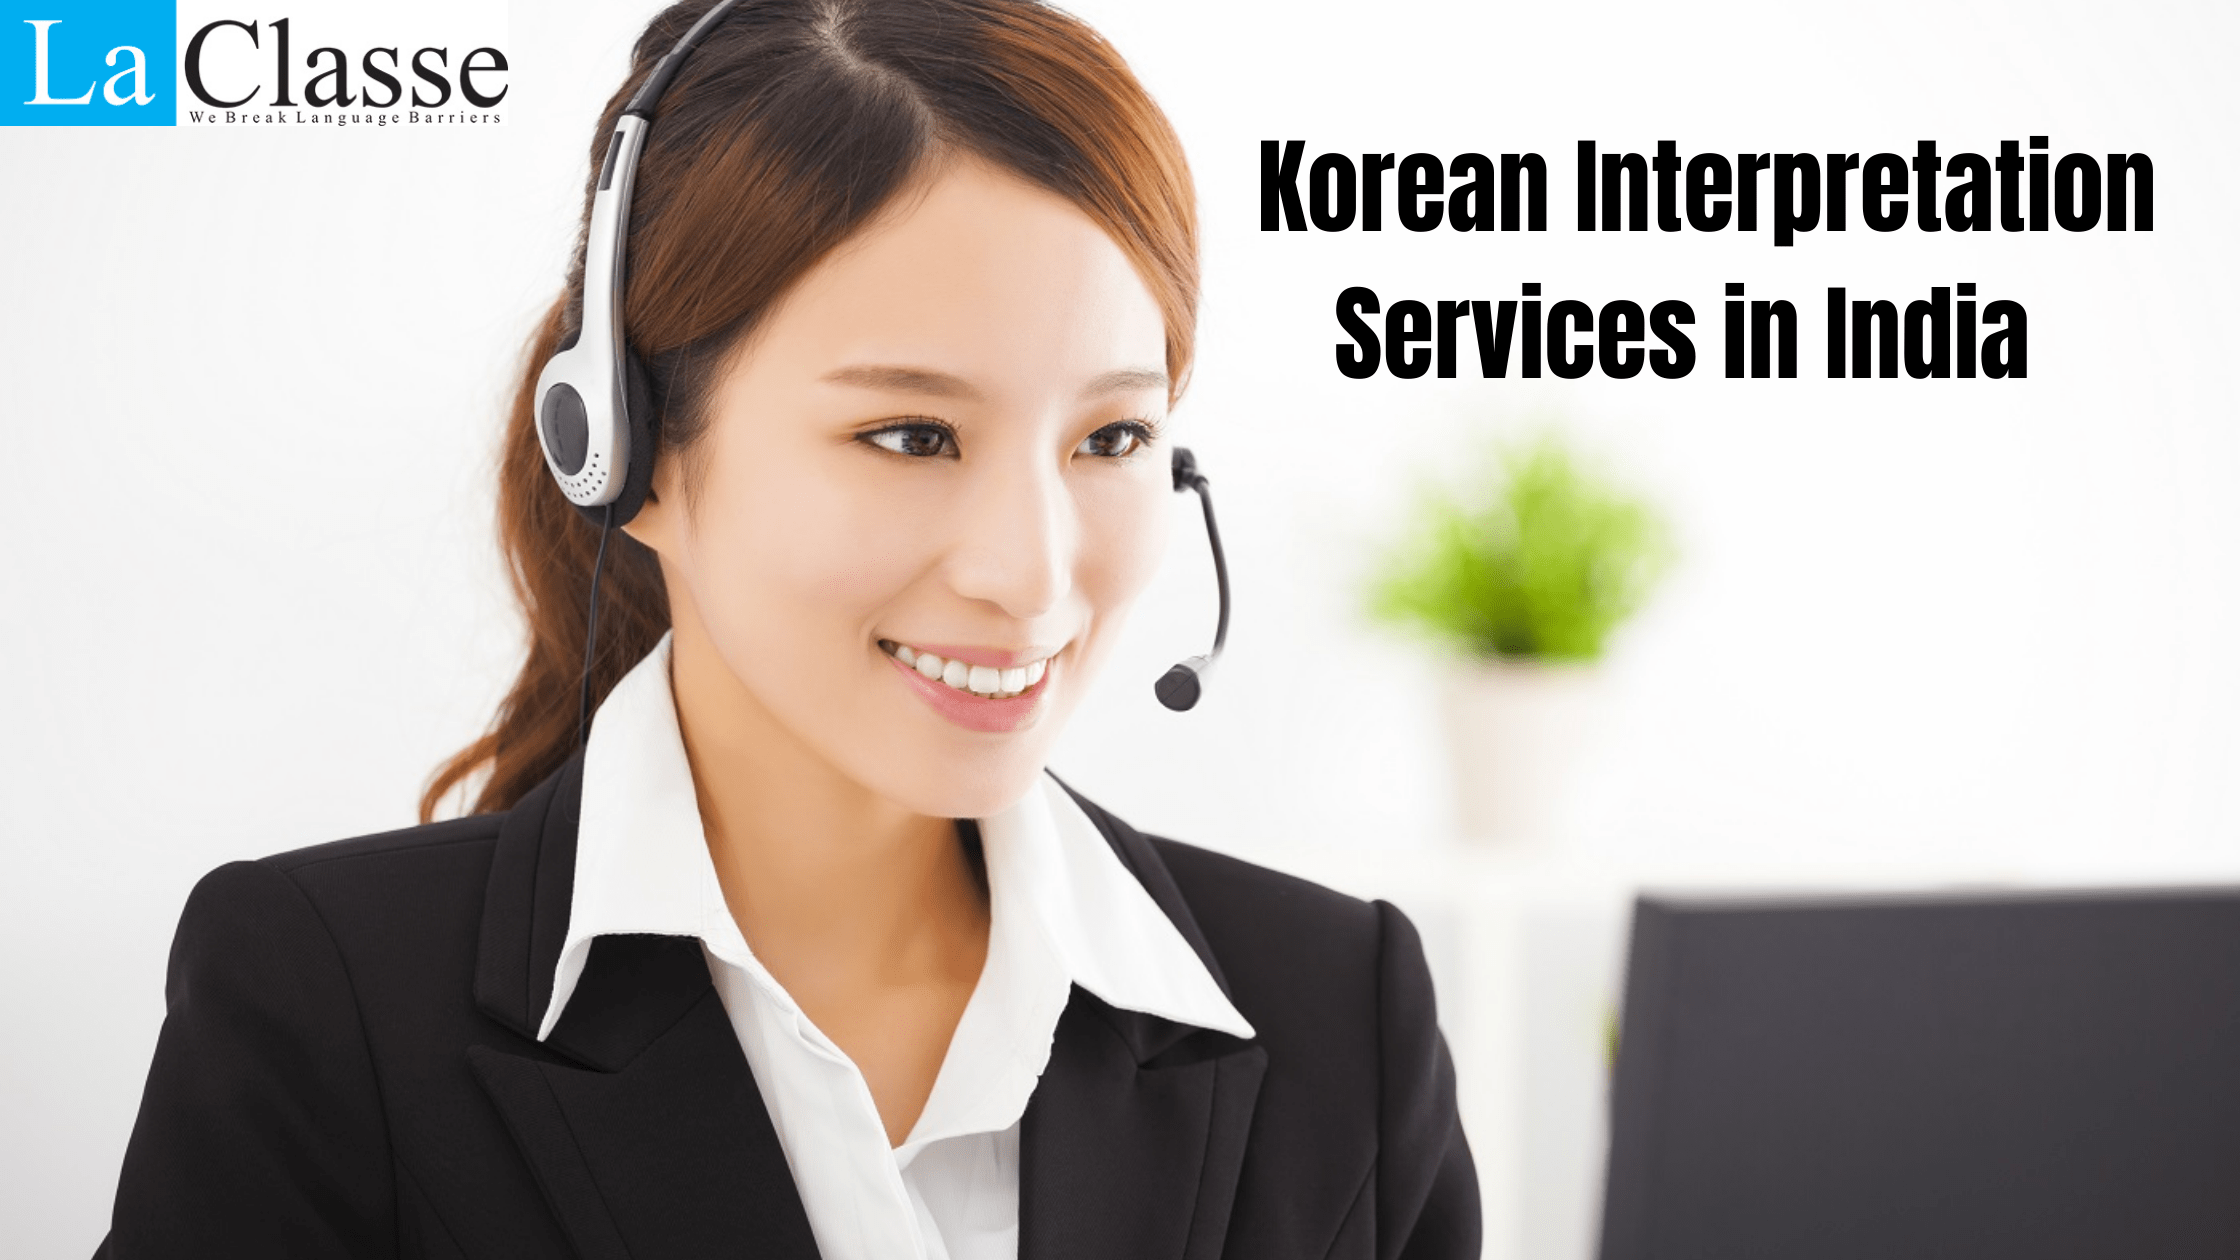 Korean Interpretation Services in India